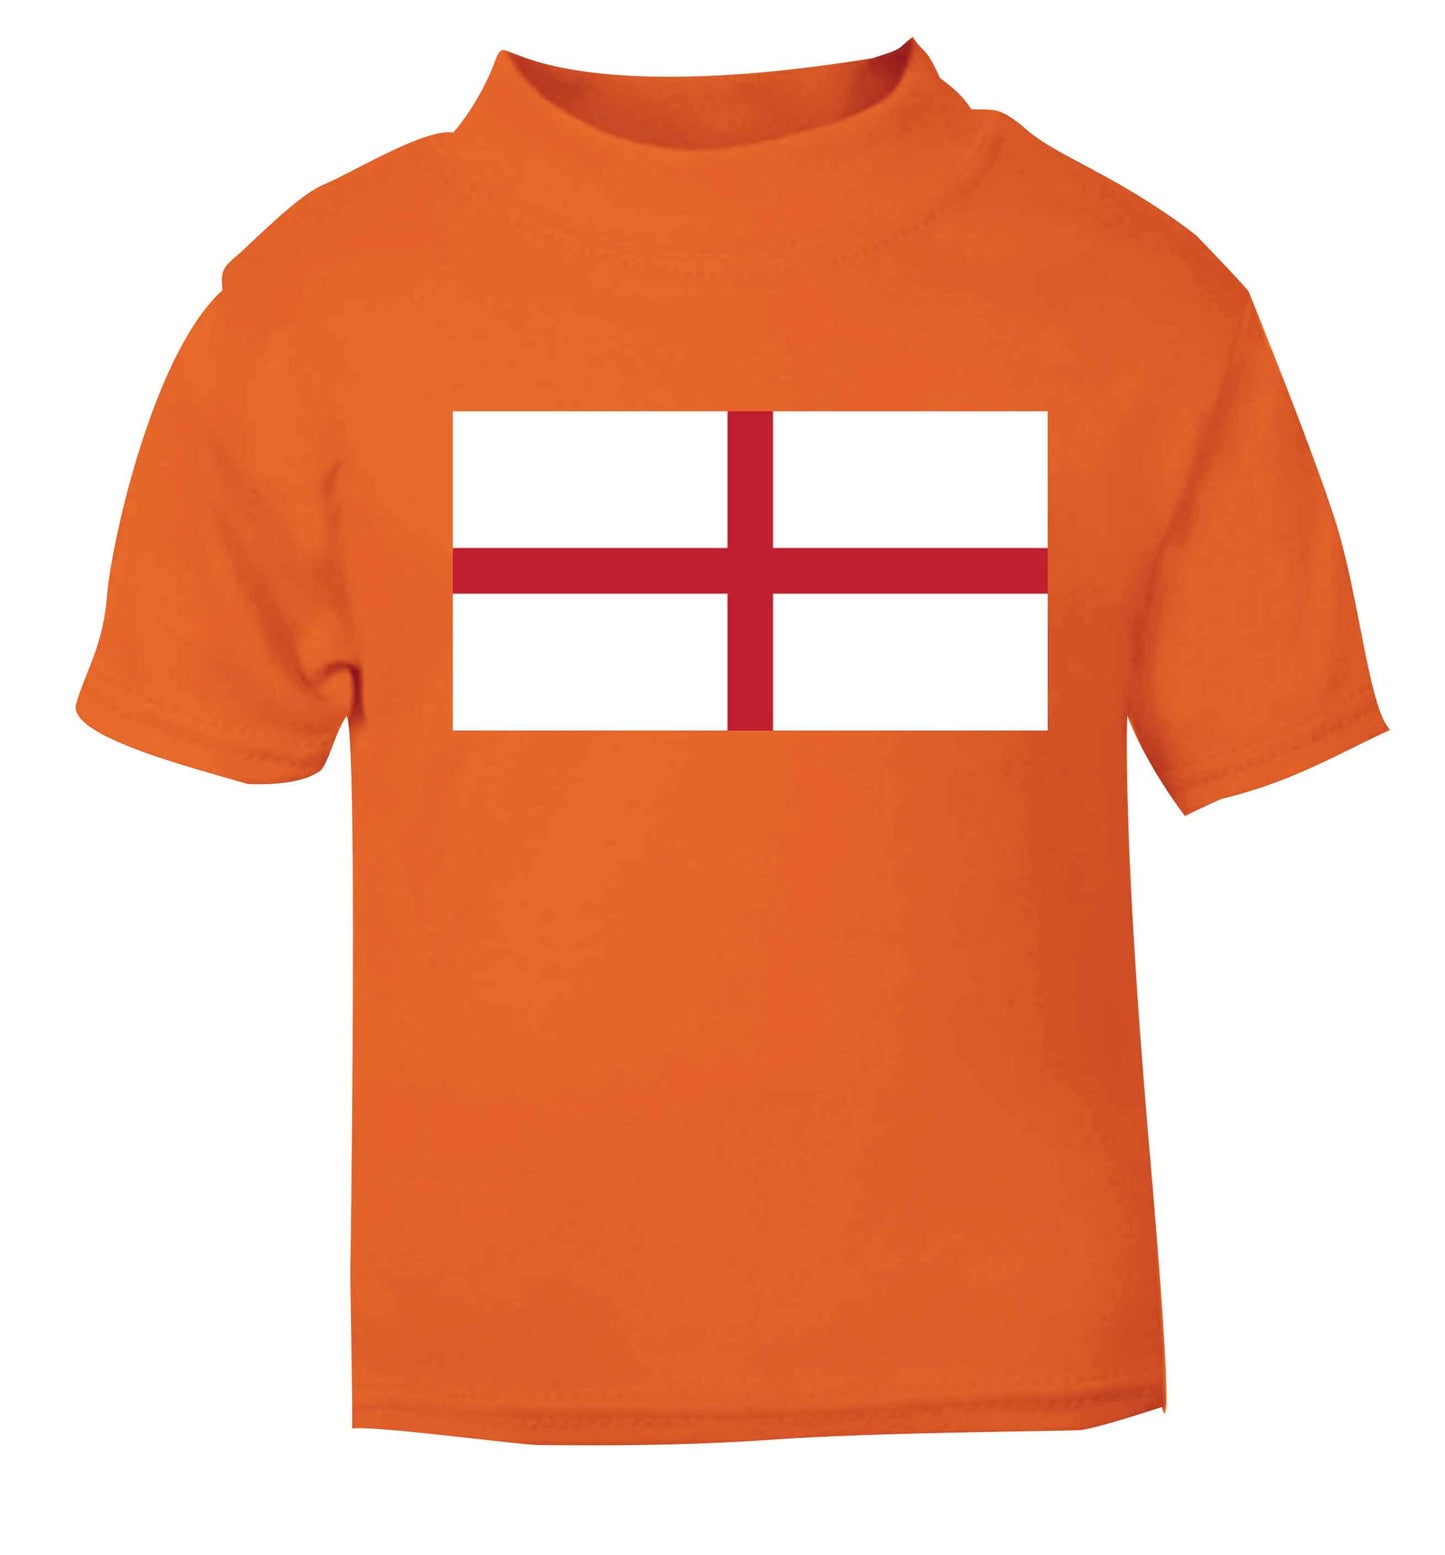 England Flag orange baby toddler Tshirt 2 Years